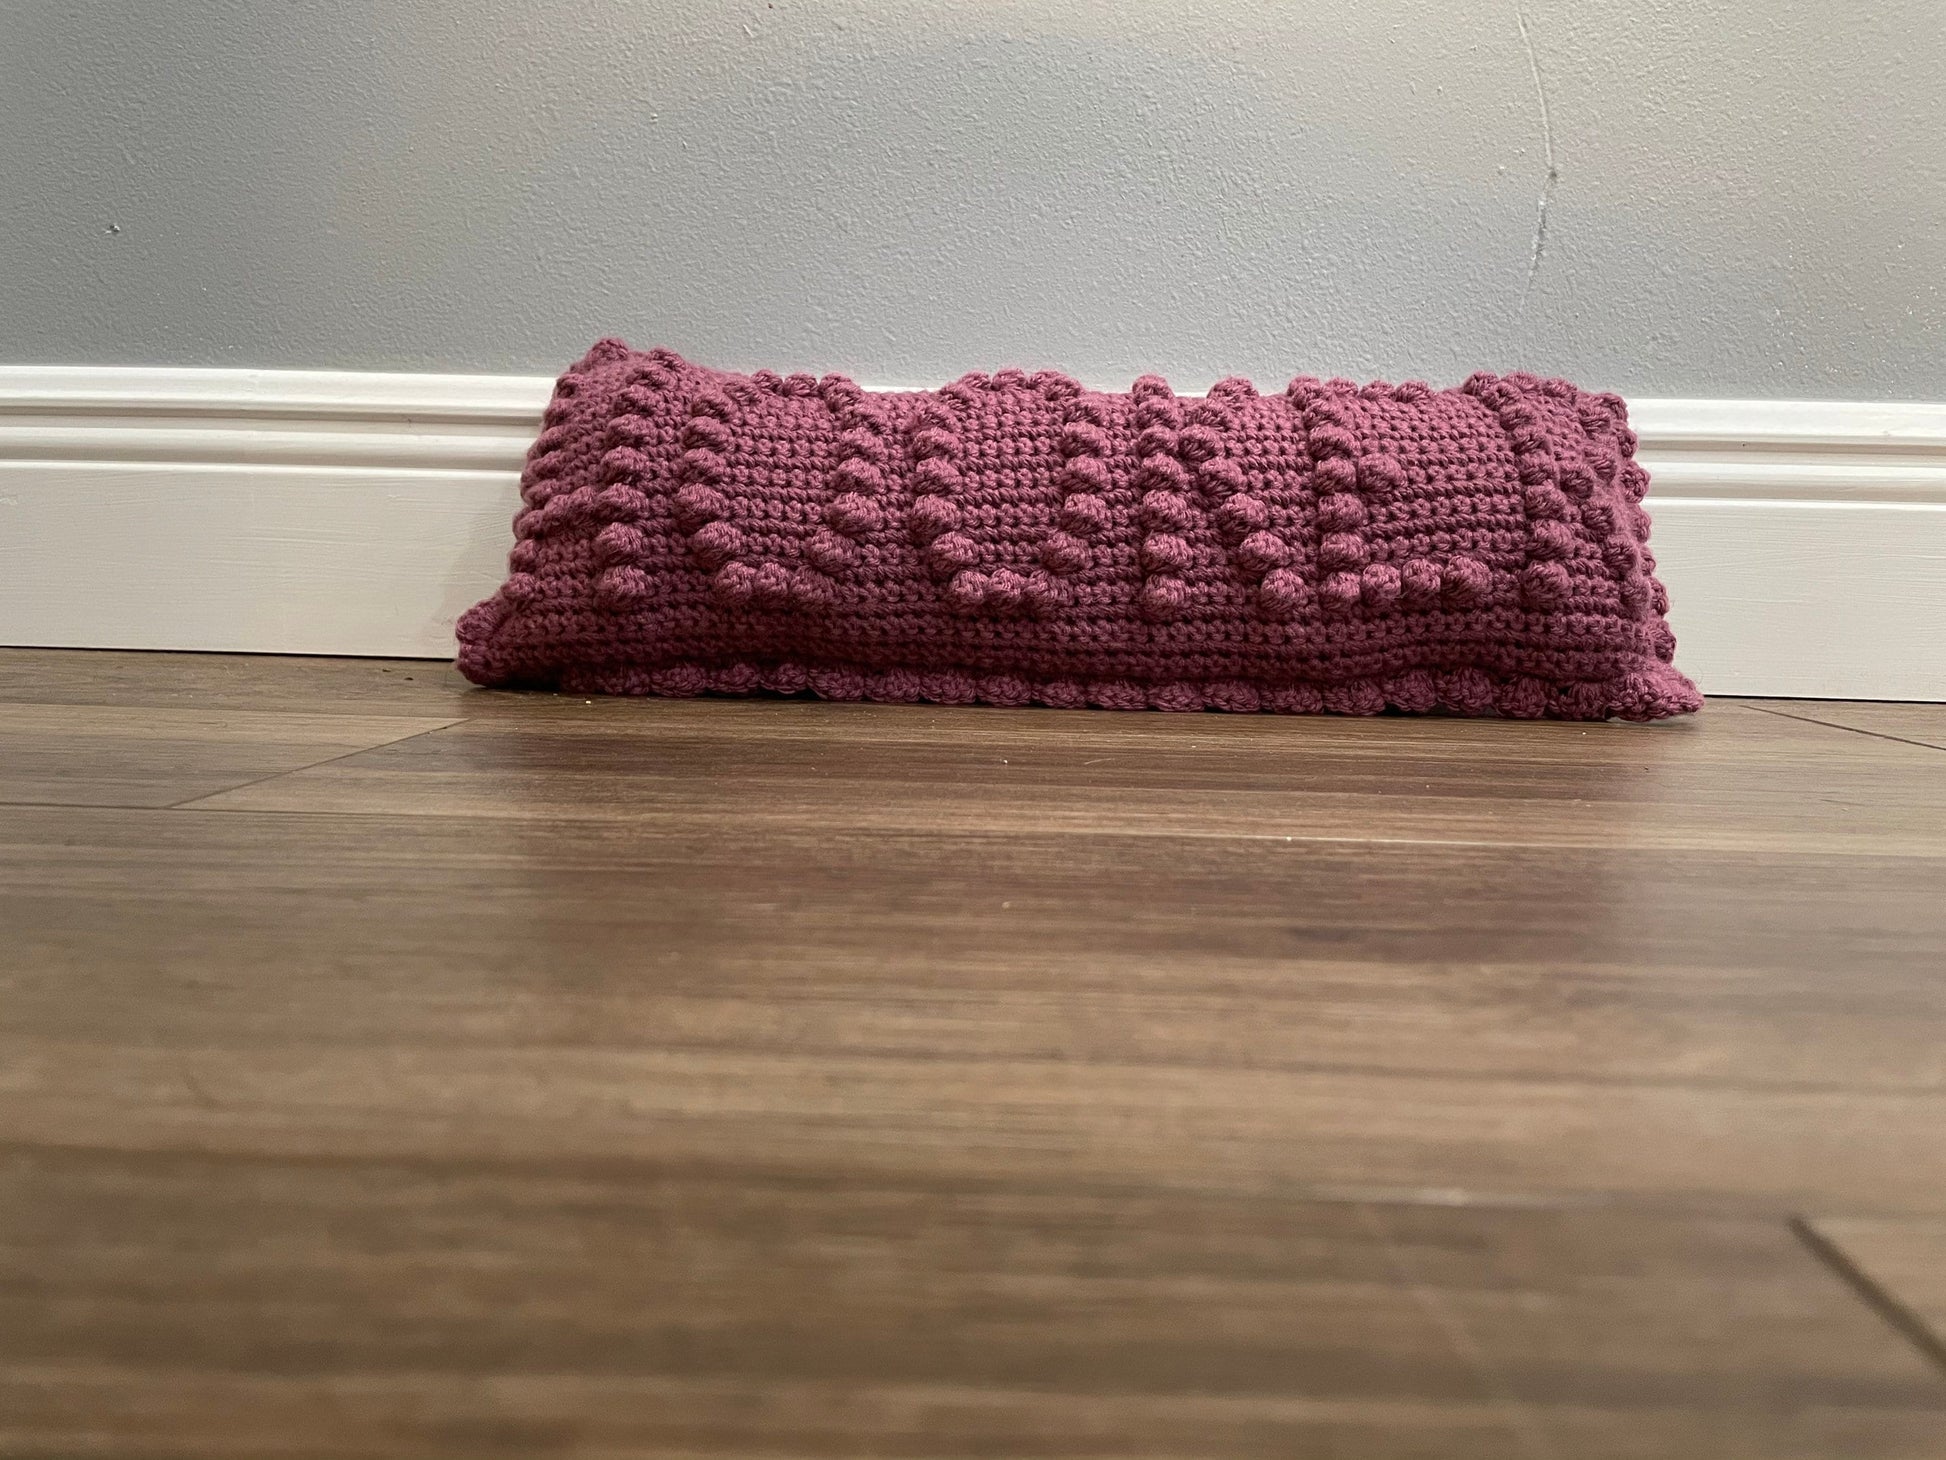 CROCHET PATTERN- Crochet Hooker Pillow